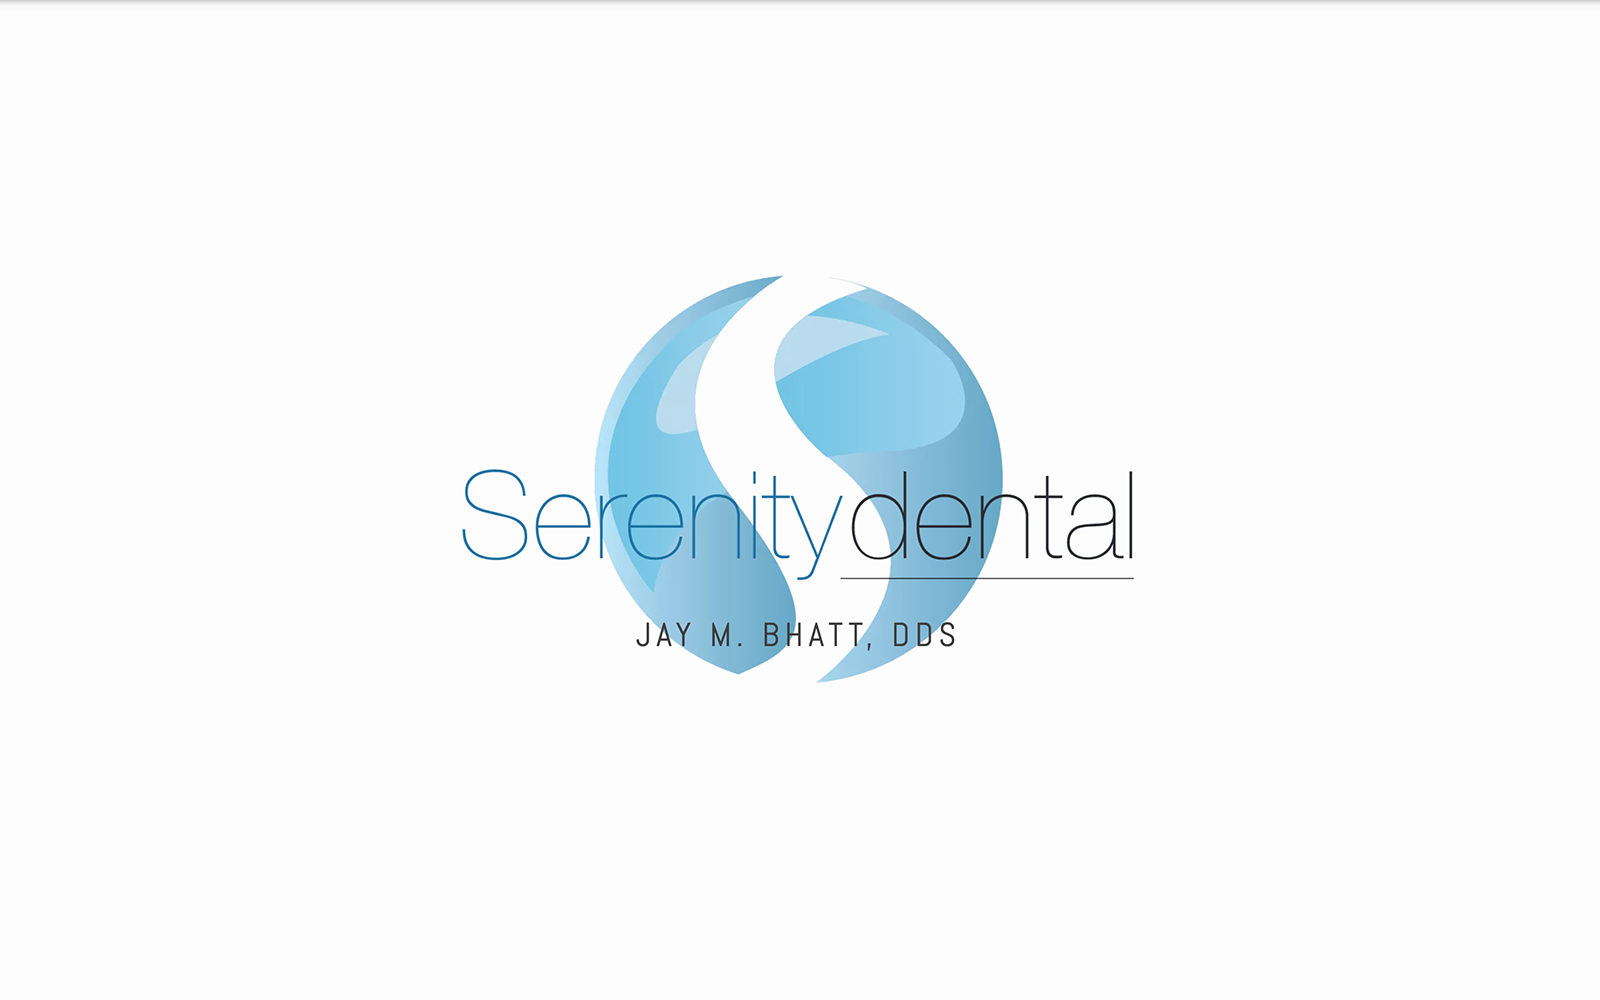 serenity dental